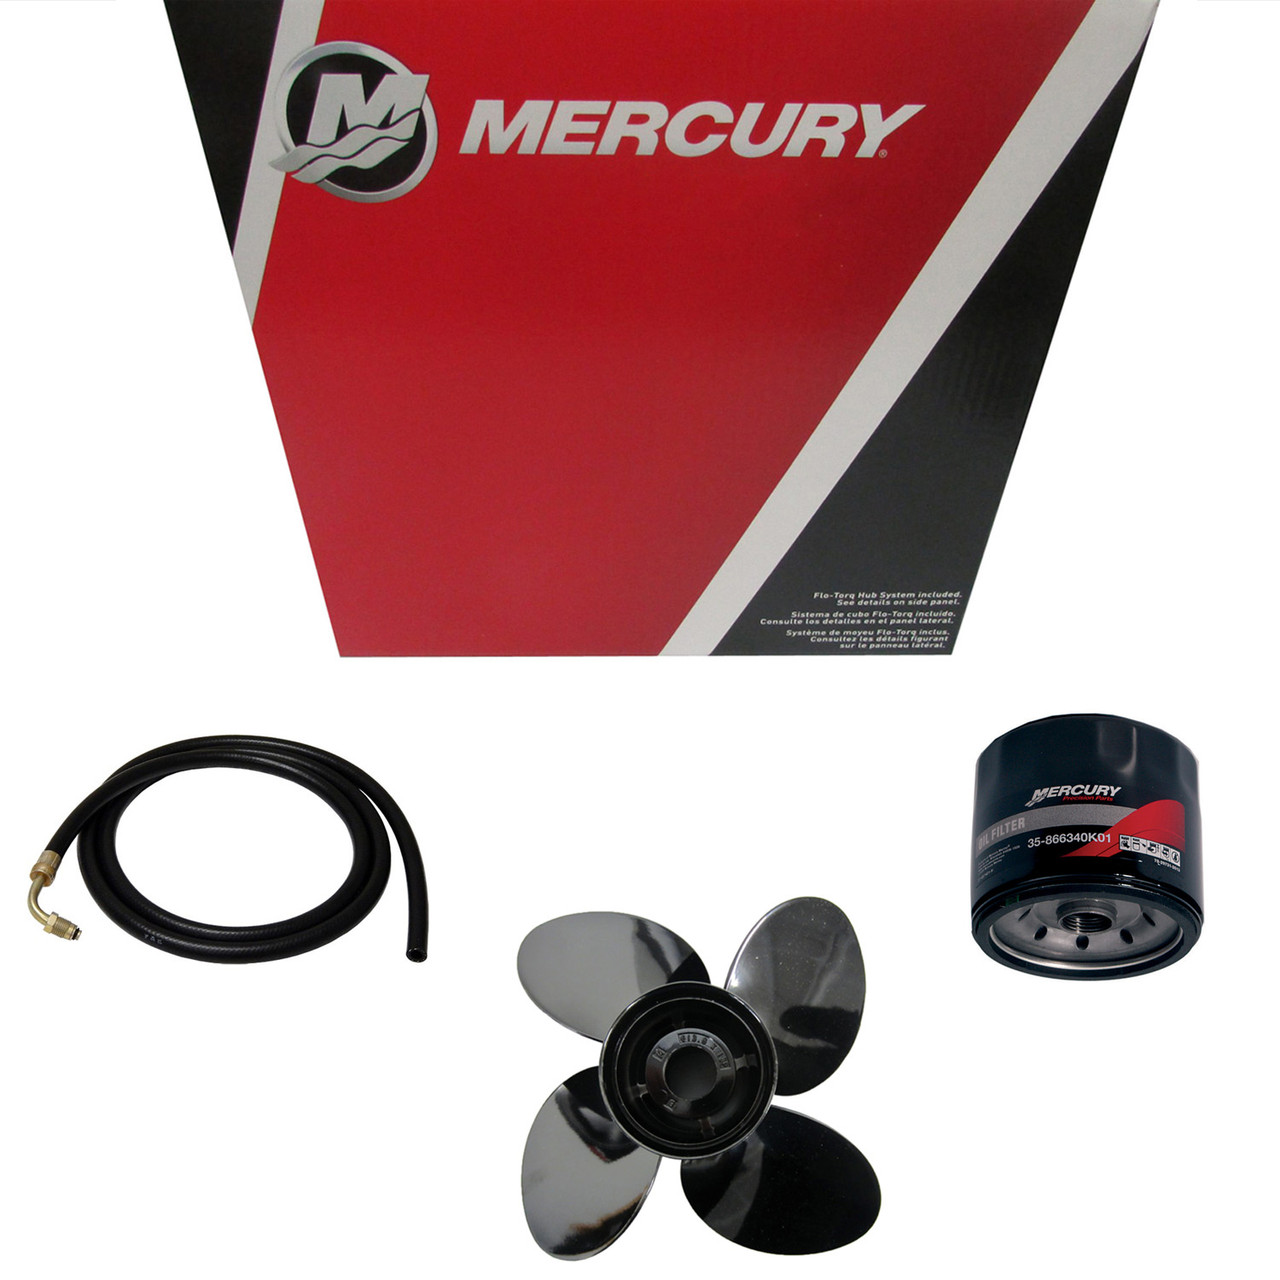 Mercury Marine / Mercruiser New OEM Prop 17.00T31 21R, 48-8M0049622